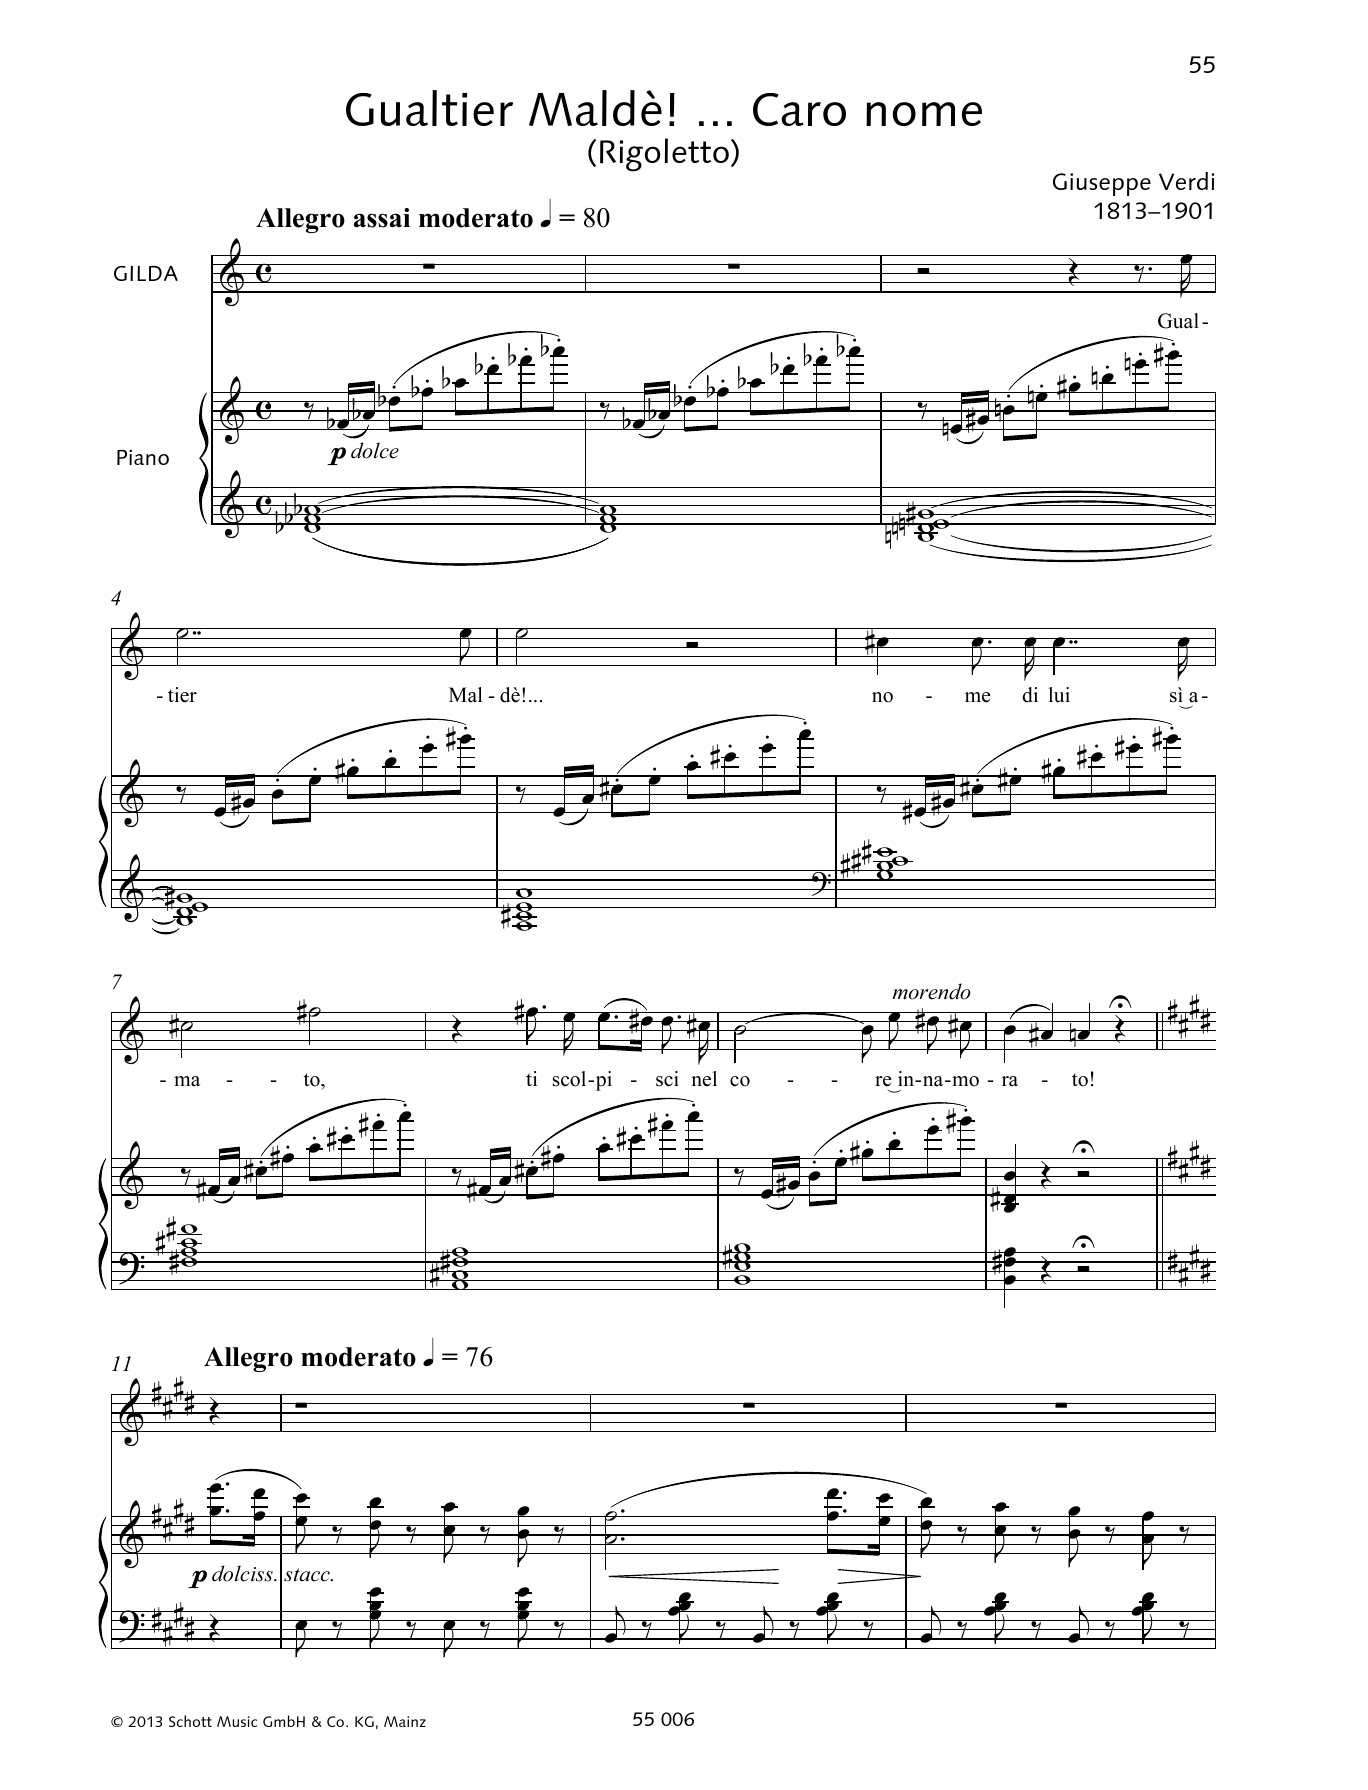 Giuseppe Verdi Gualtier Maldè!...Caro nome Sheet Music Notes & Chords for Piano & Vocal - Download or Print PDF